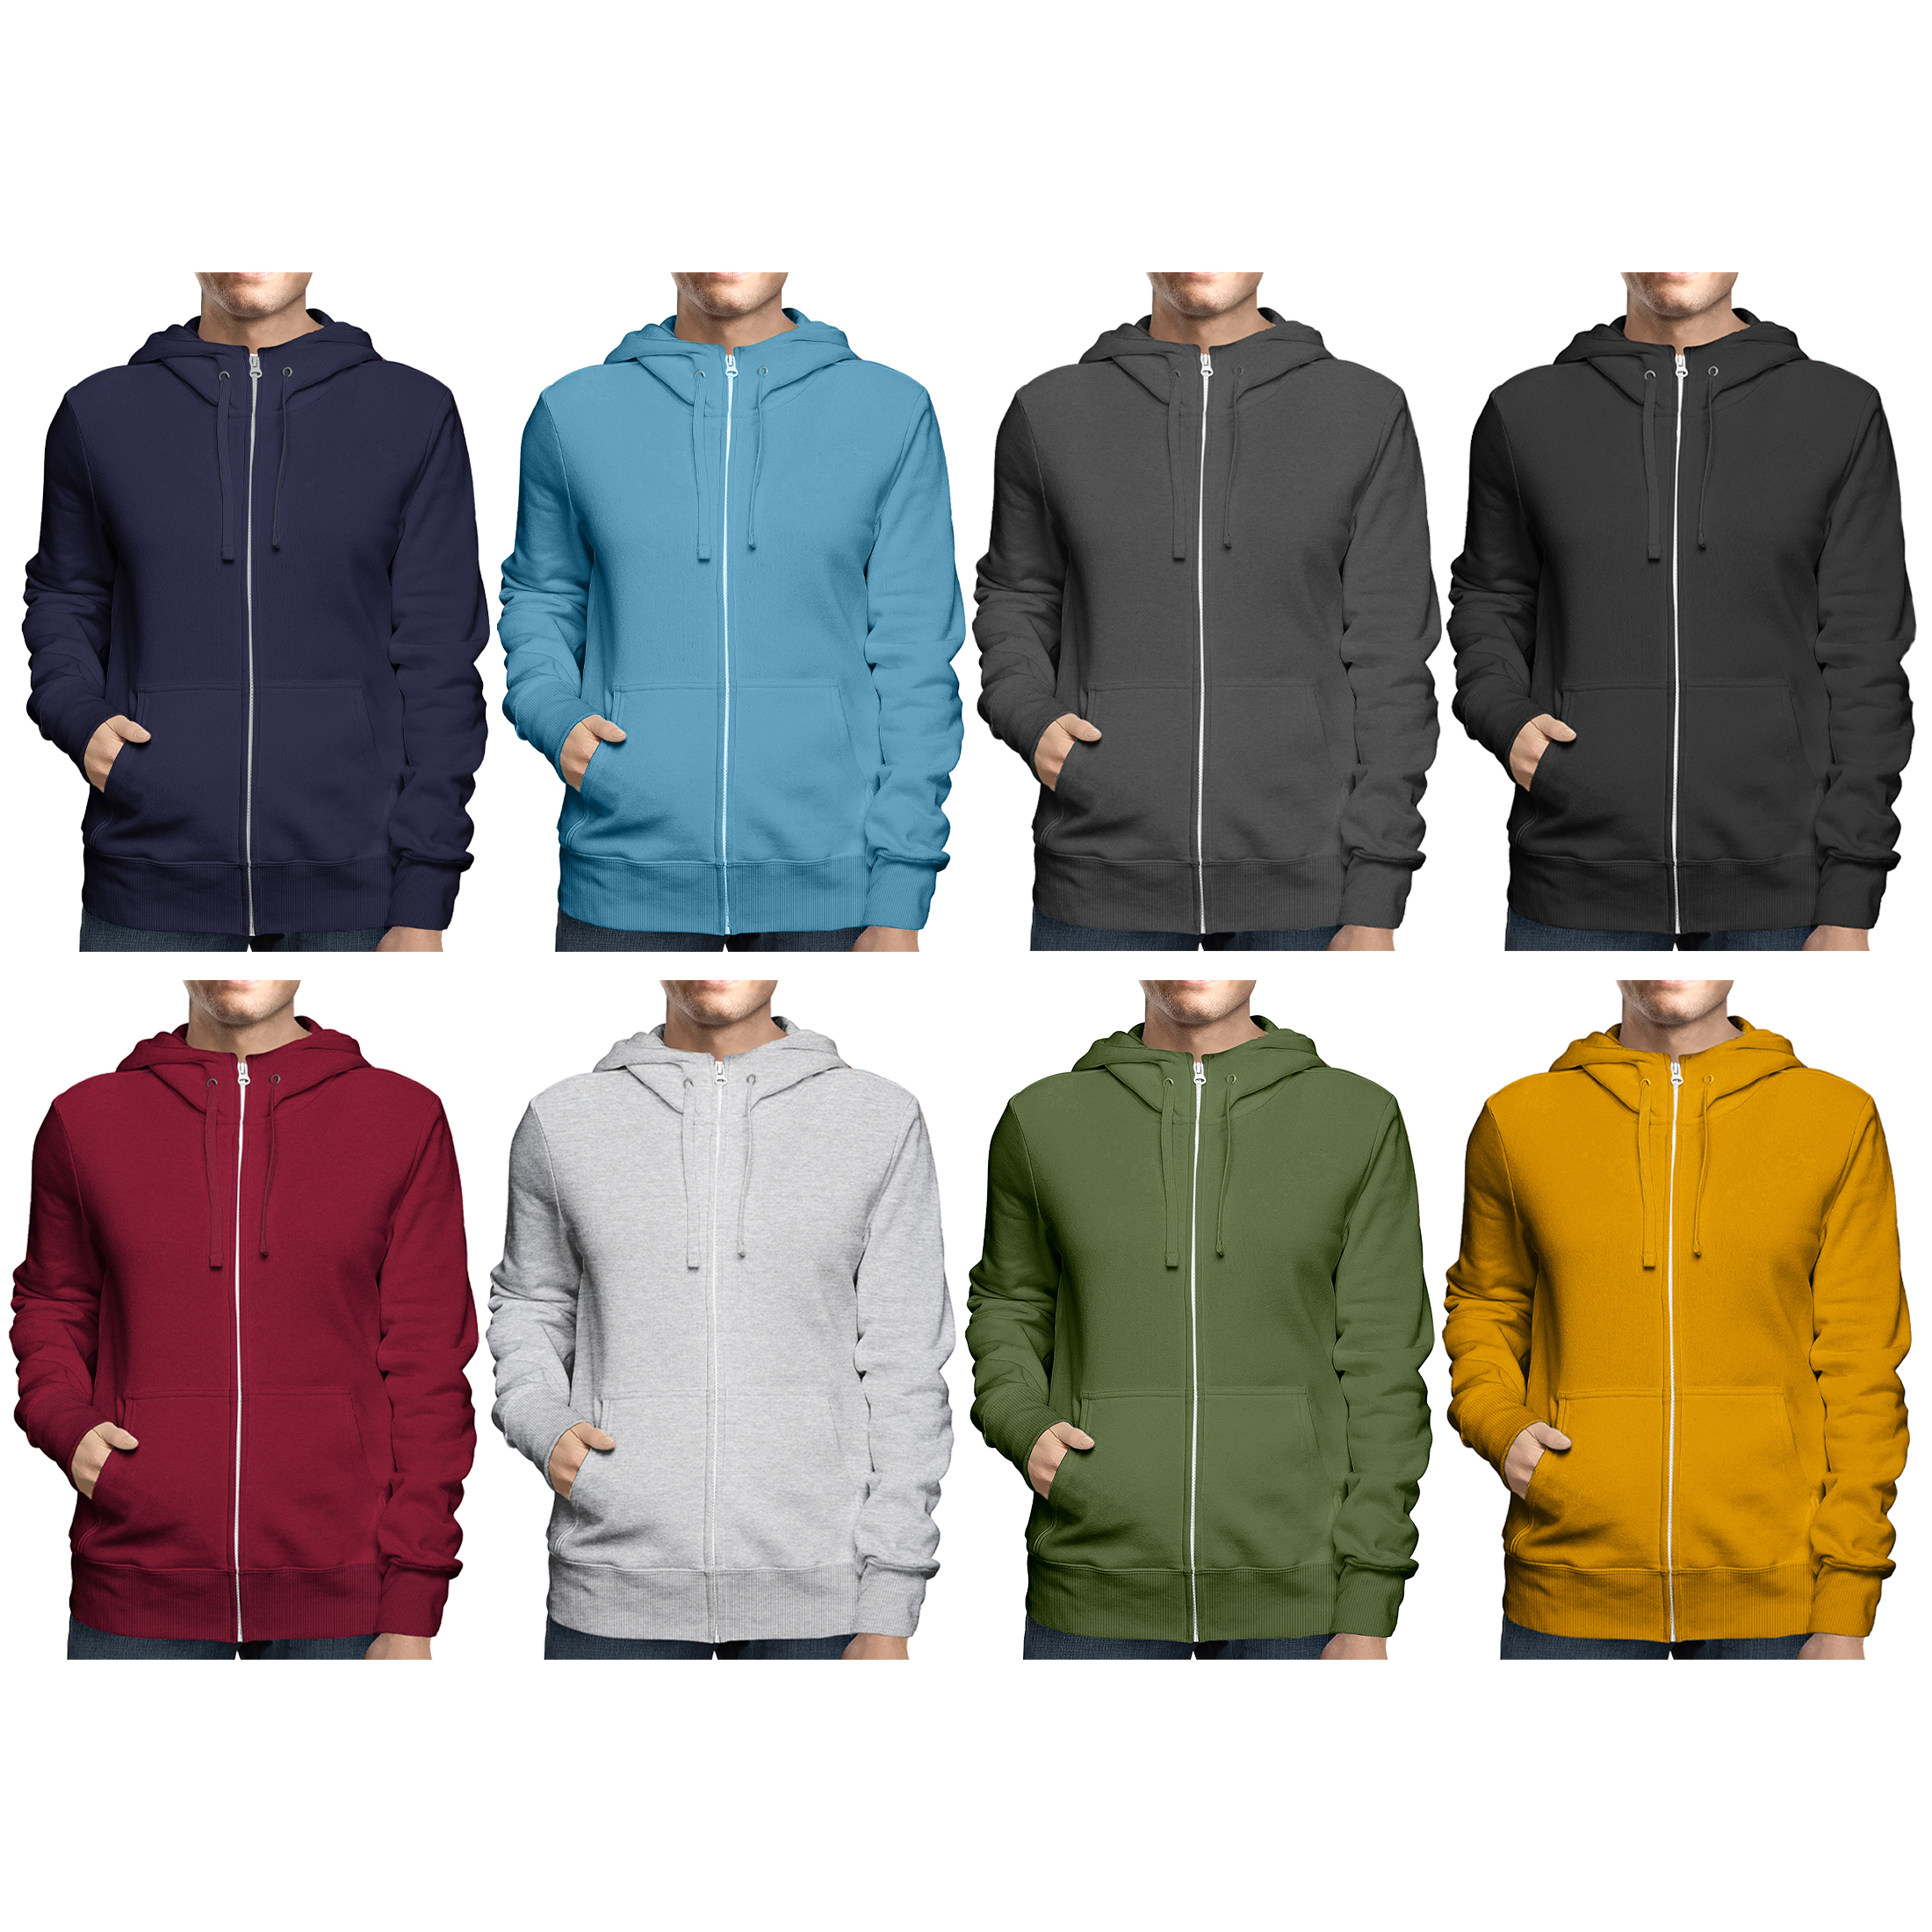 2-Pack: Men's Full Zip Up Fleece-Lined Hoodie Sweatshirt (Big & Tall Size Available) - Black & Burgundy, 2x-large